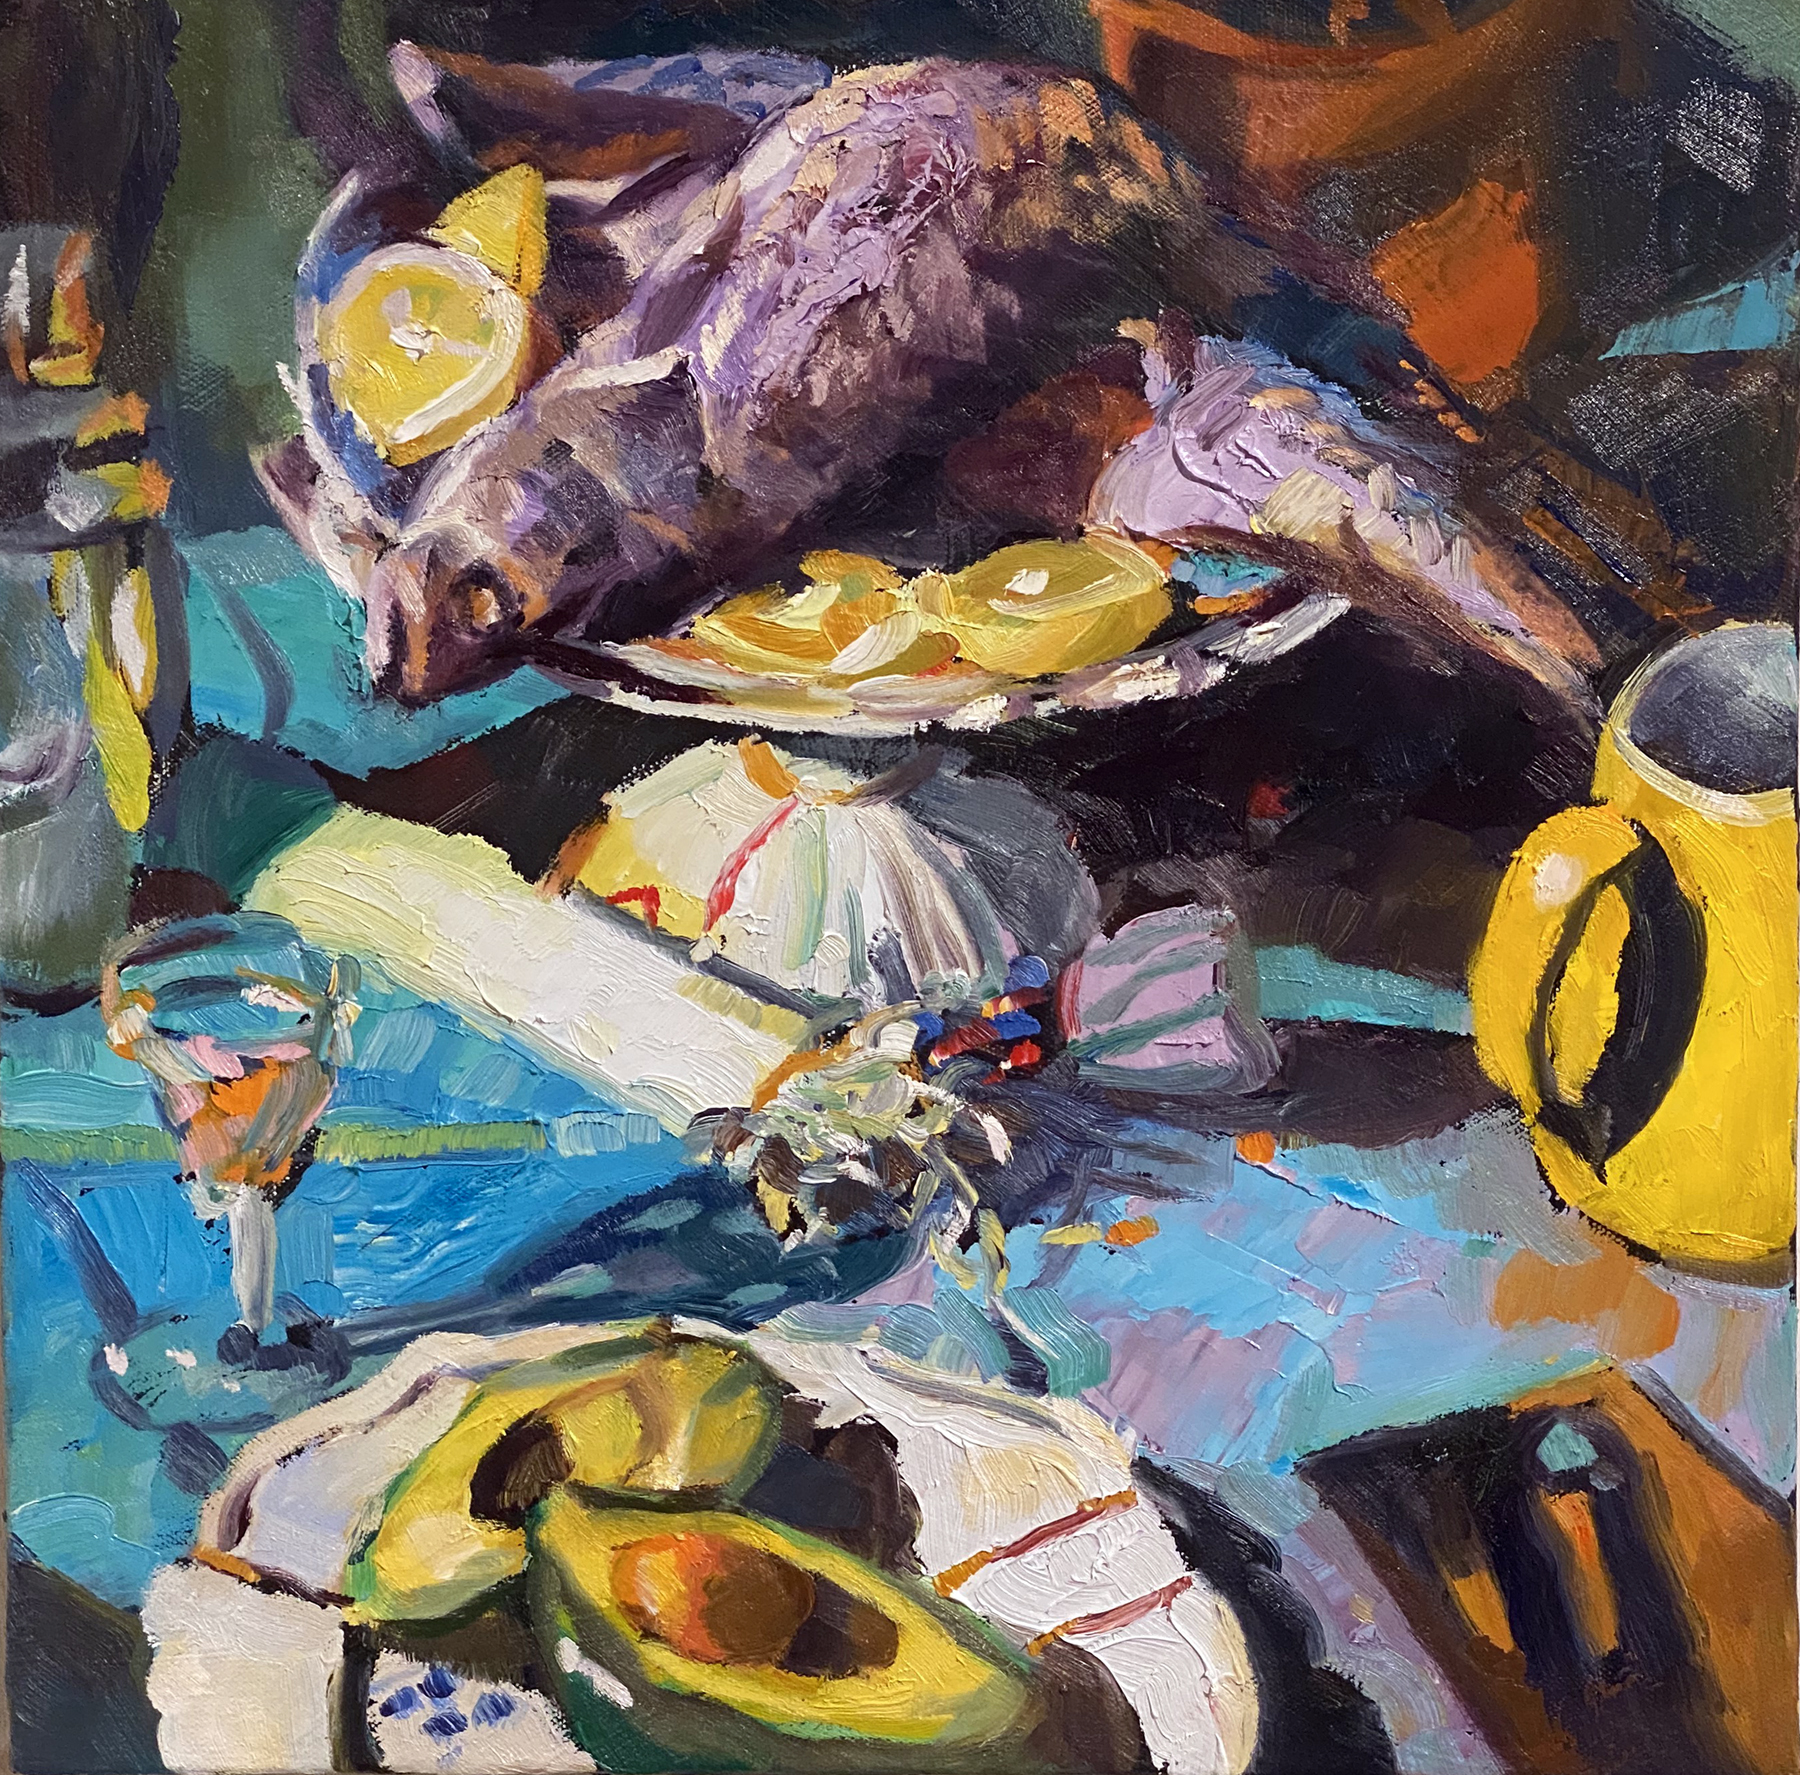 Rosemary Valadon 'Summer Days (Fish) 2' oil on canvas 40 x 40cm $4,500